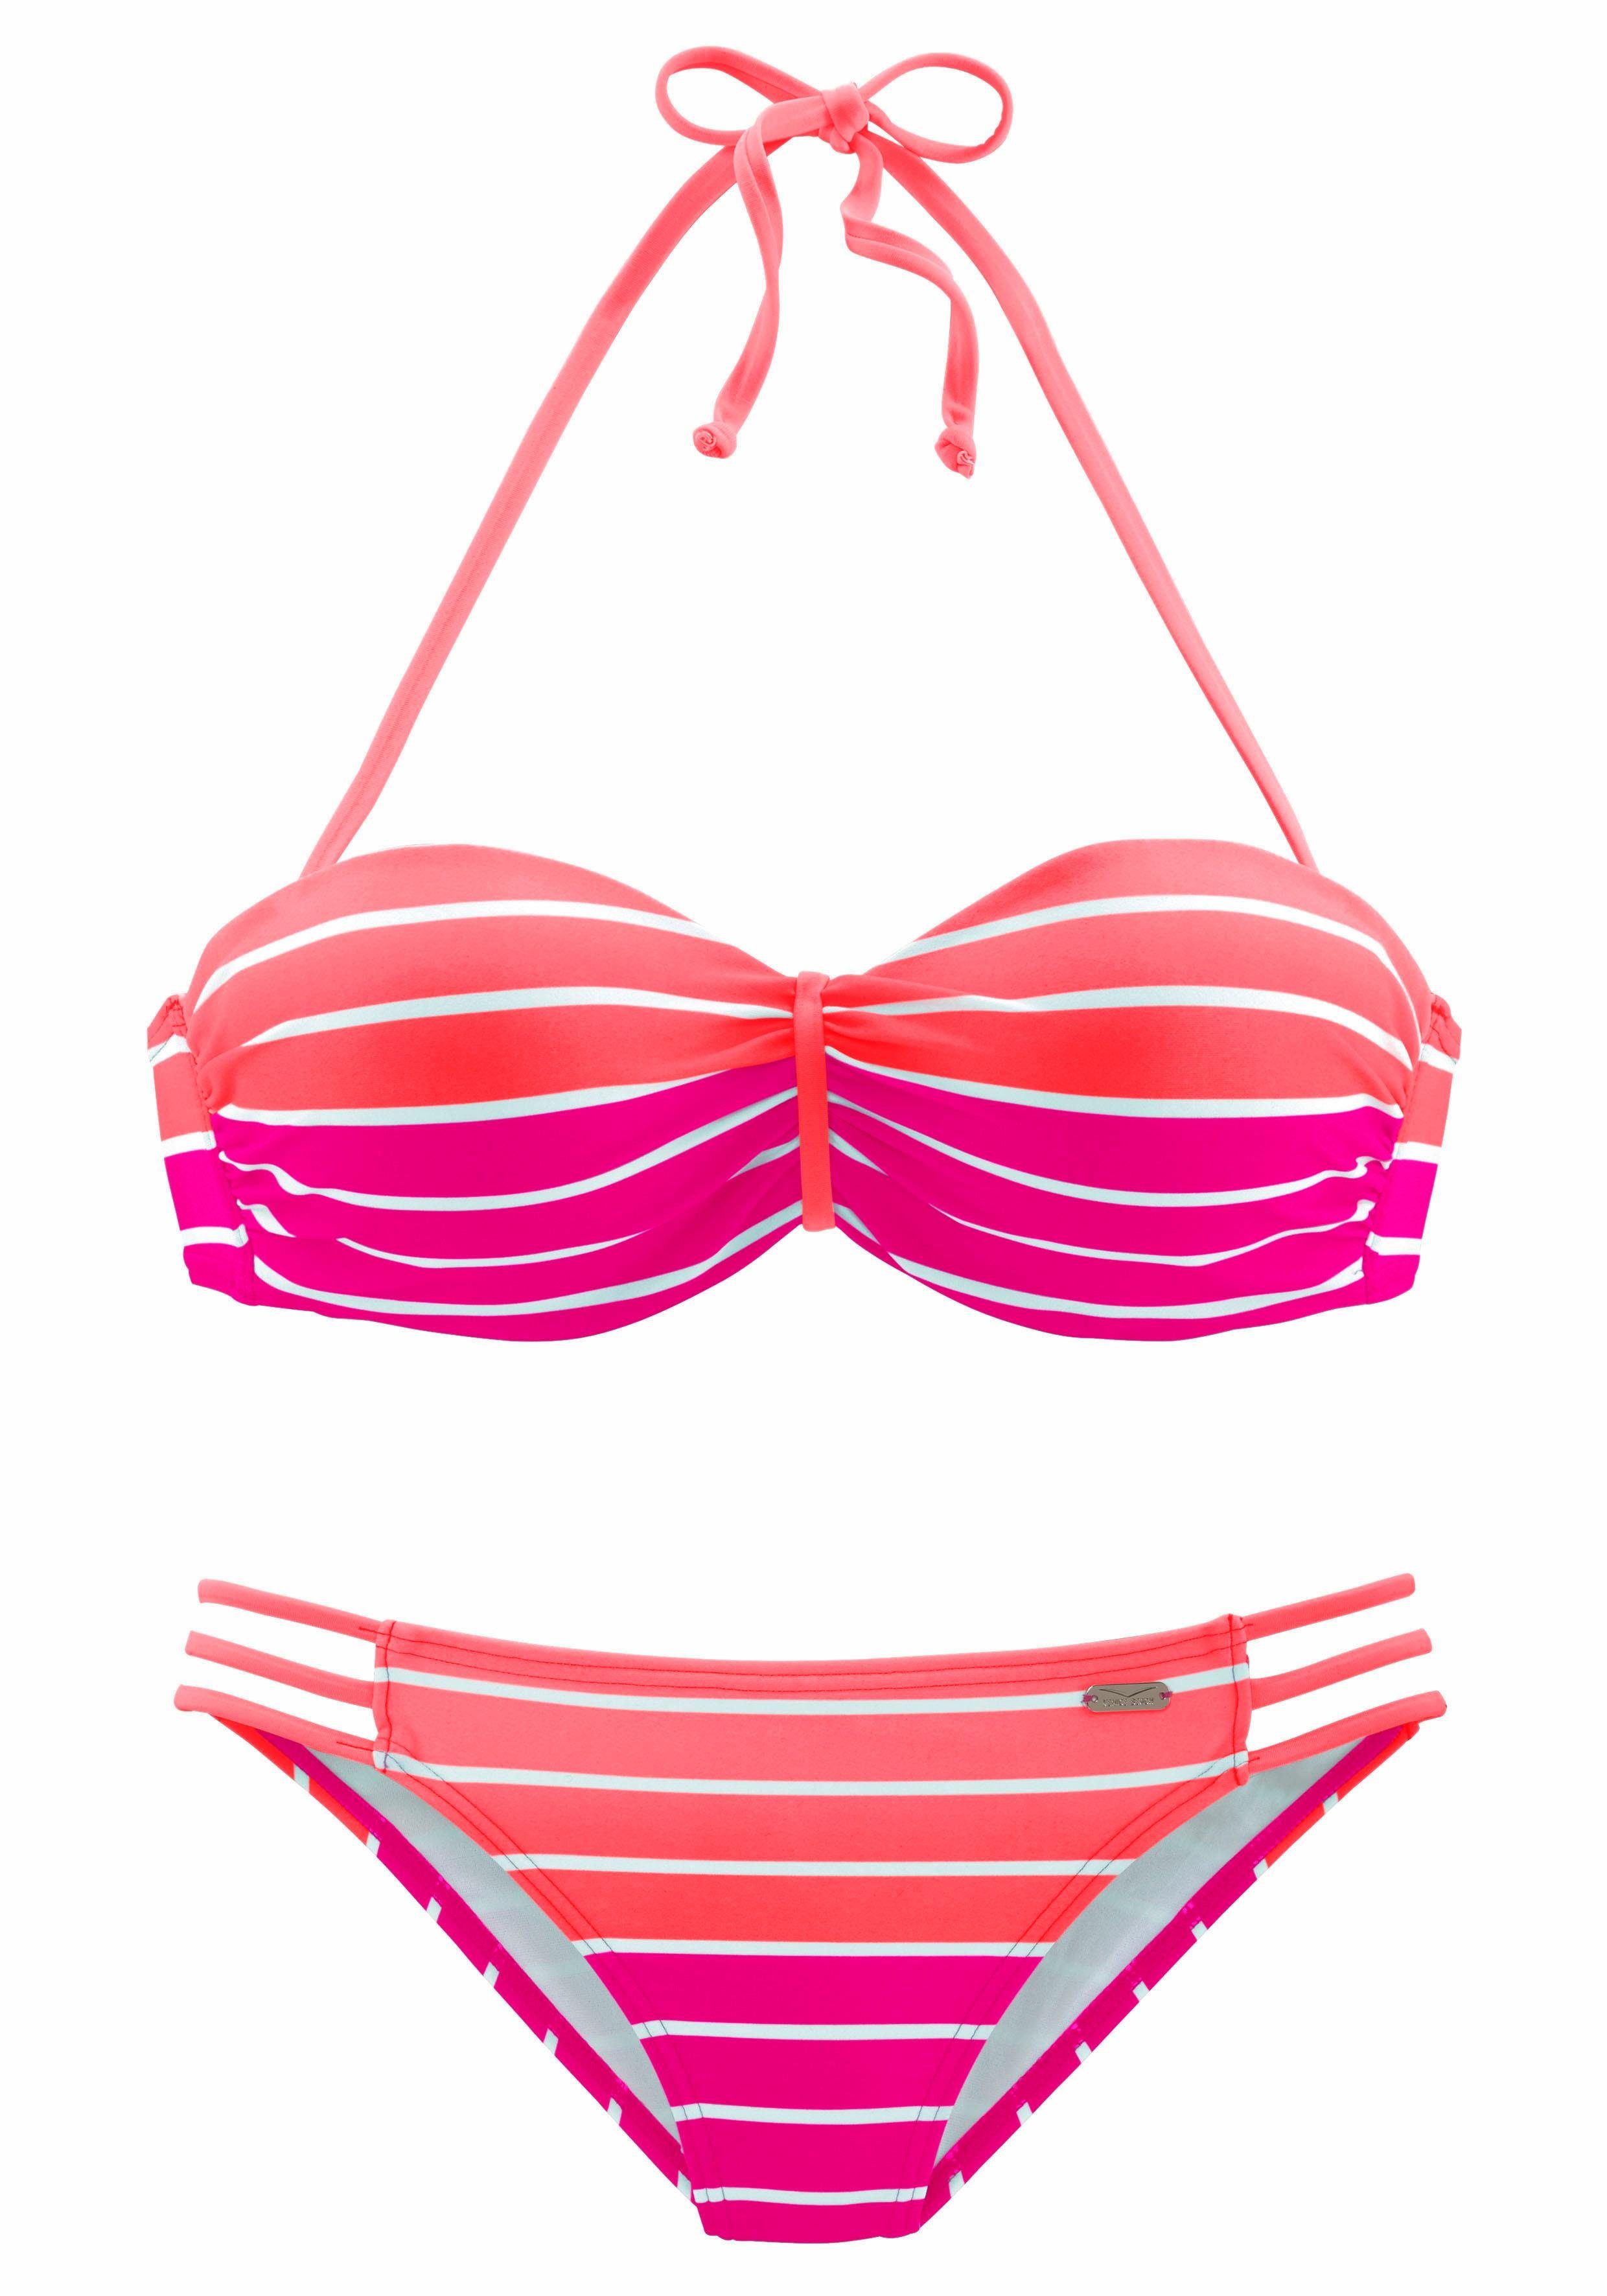 Venice Beach pink-gestreift trendigen Bügel-Bandeau-Bikini im Streifen-Look